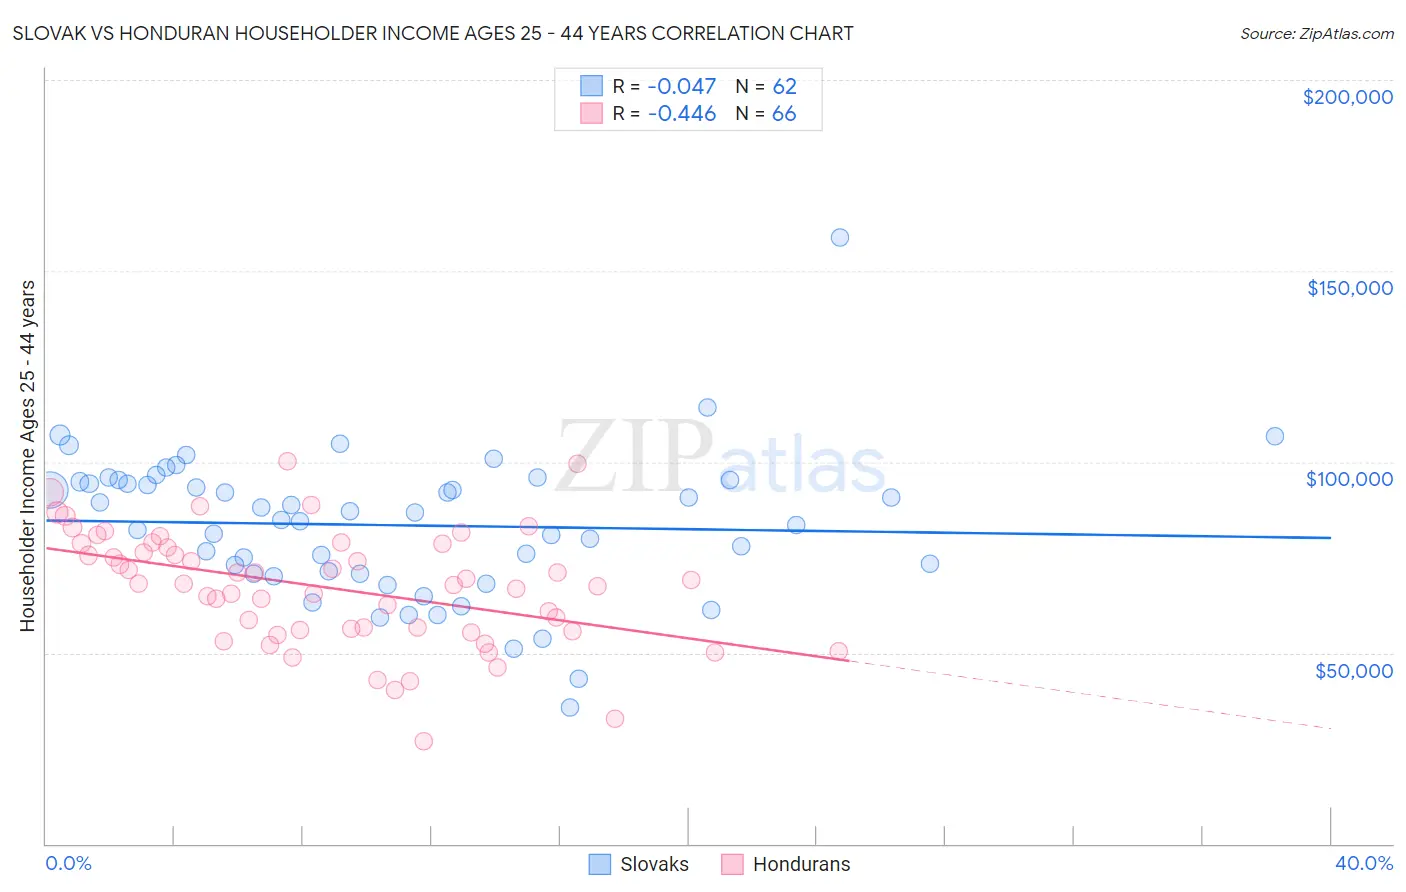 Slovak vs Honduran Householder Income Ages 25 - 44 years